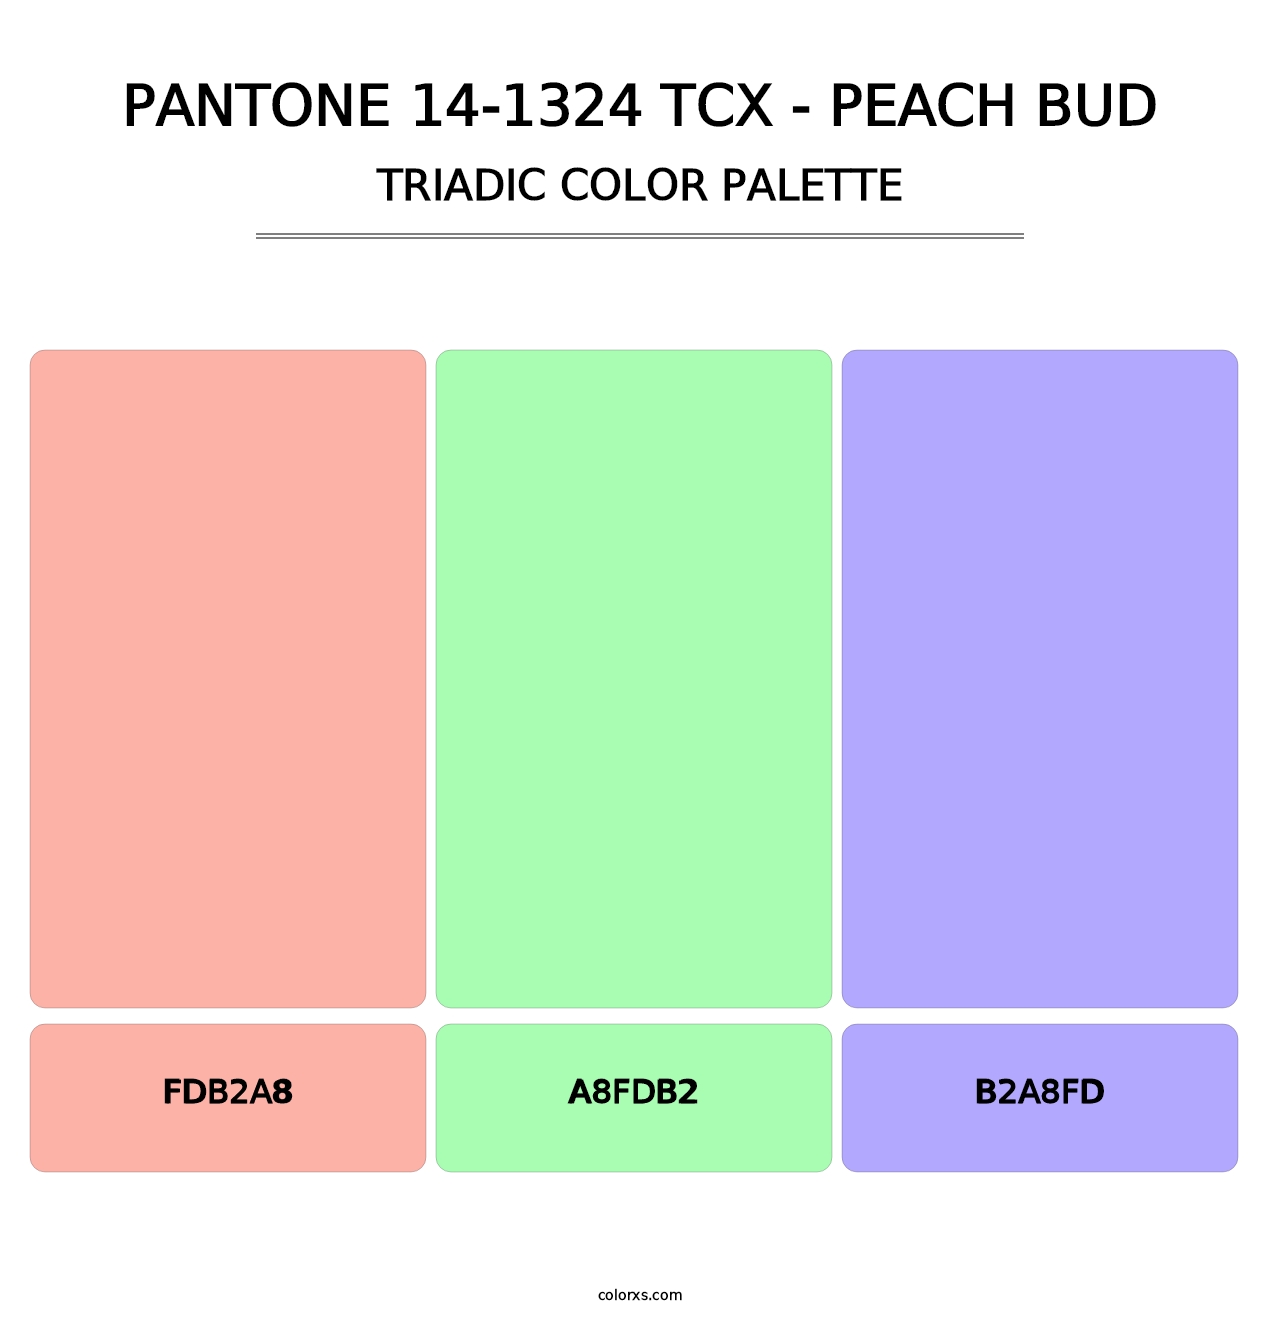 PANTONE 14-1324 TCX - Peach Bud - Triadic Color Palette